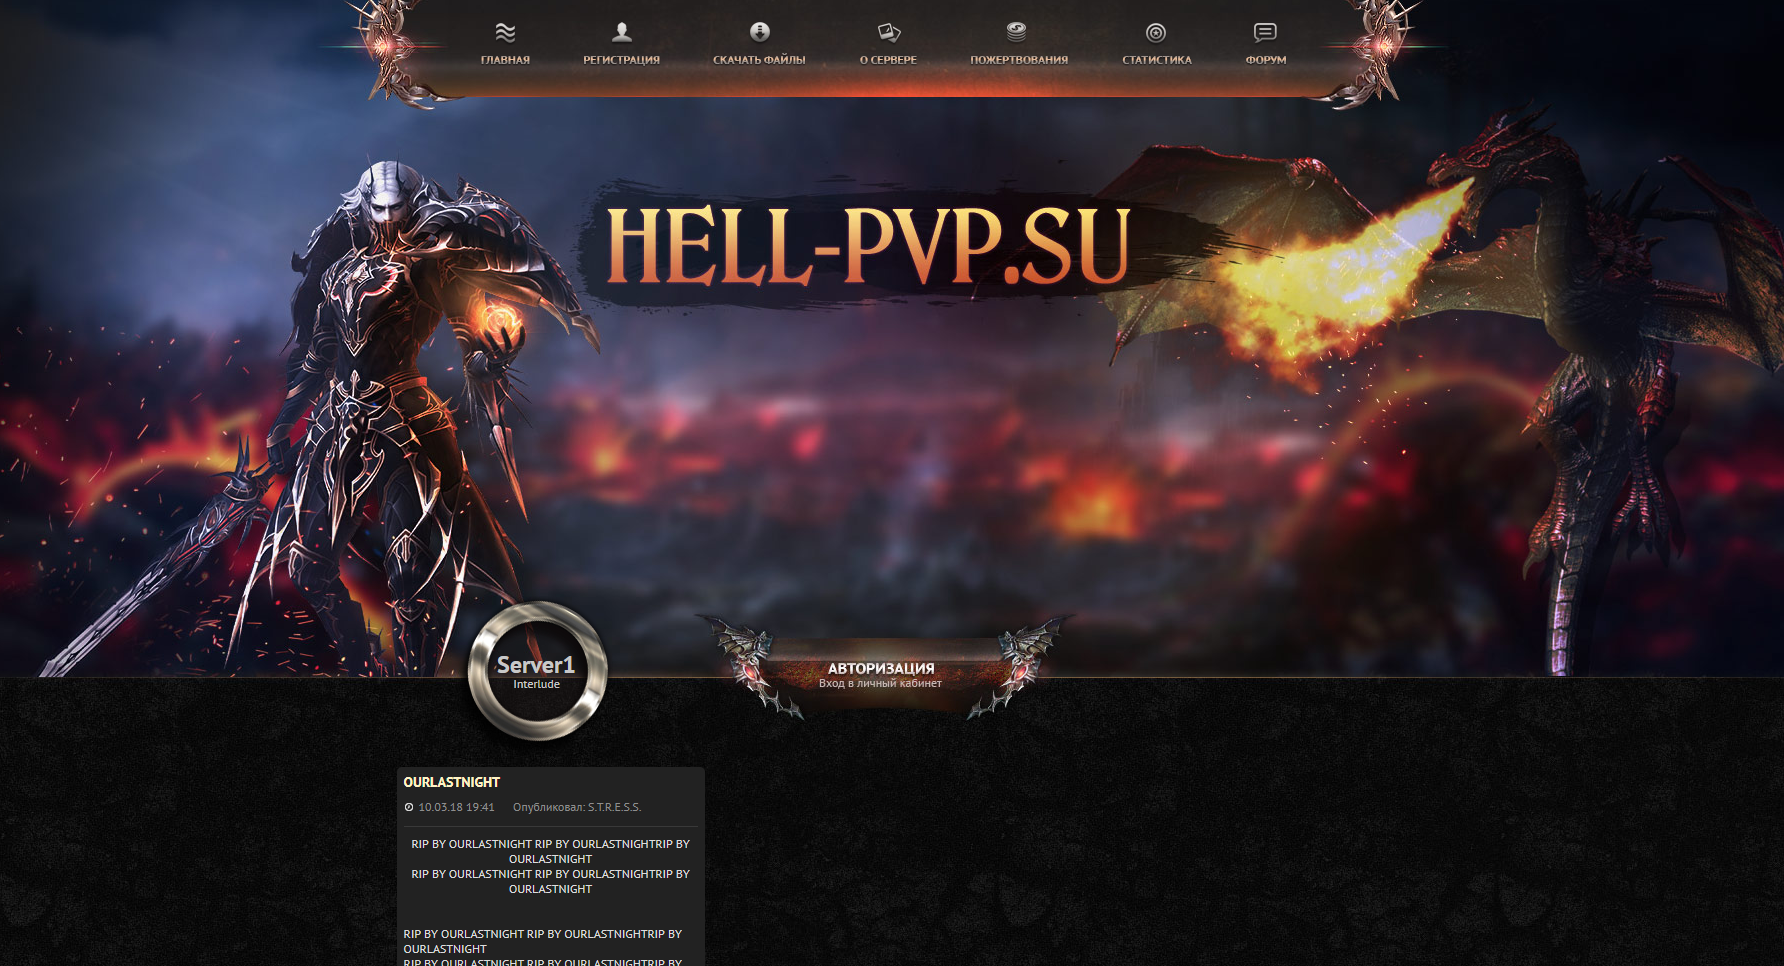 Rip Hell-PvP.Su - StressWeb 13